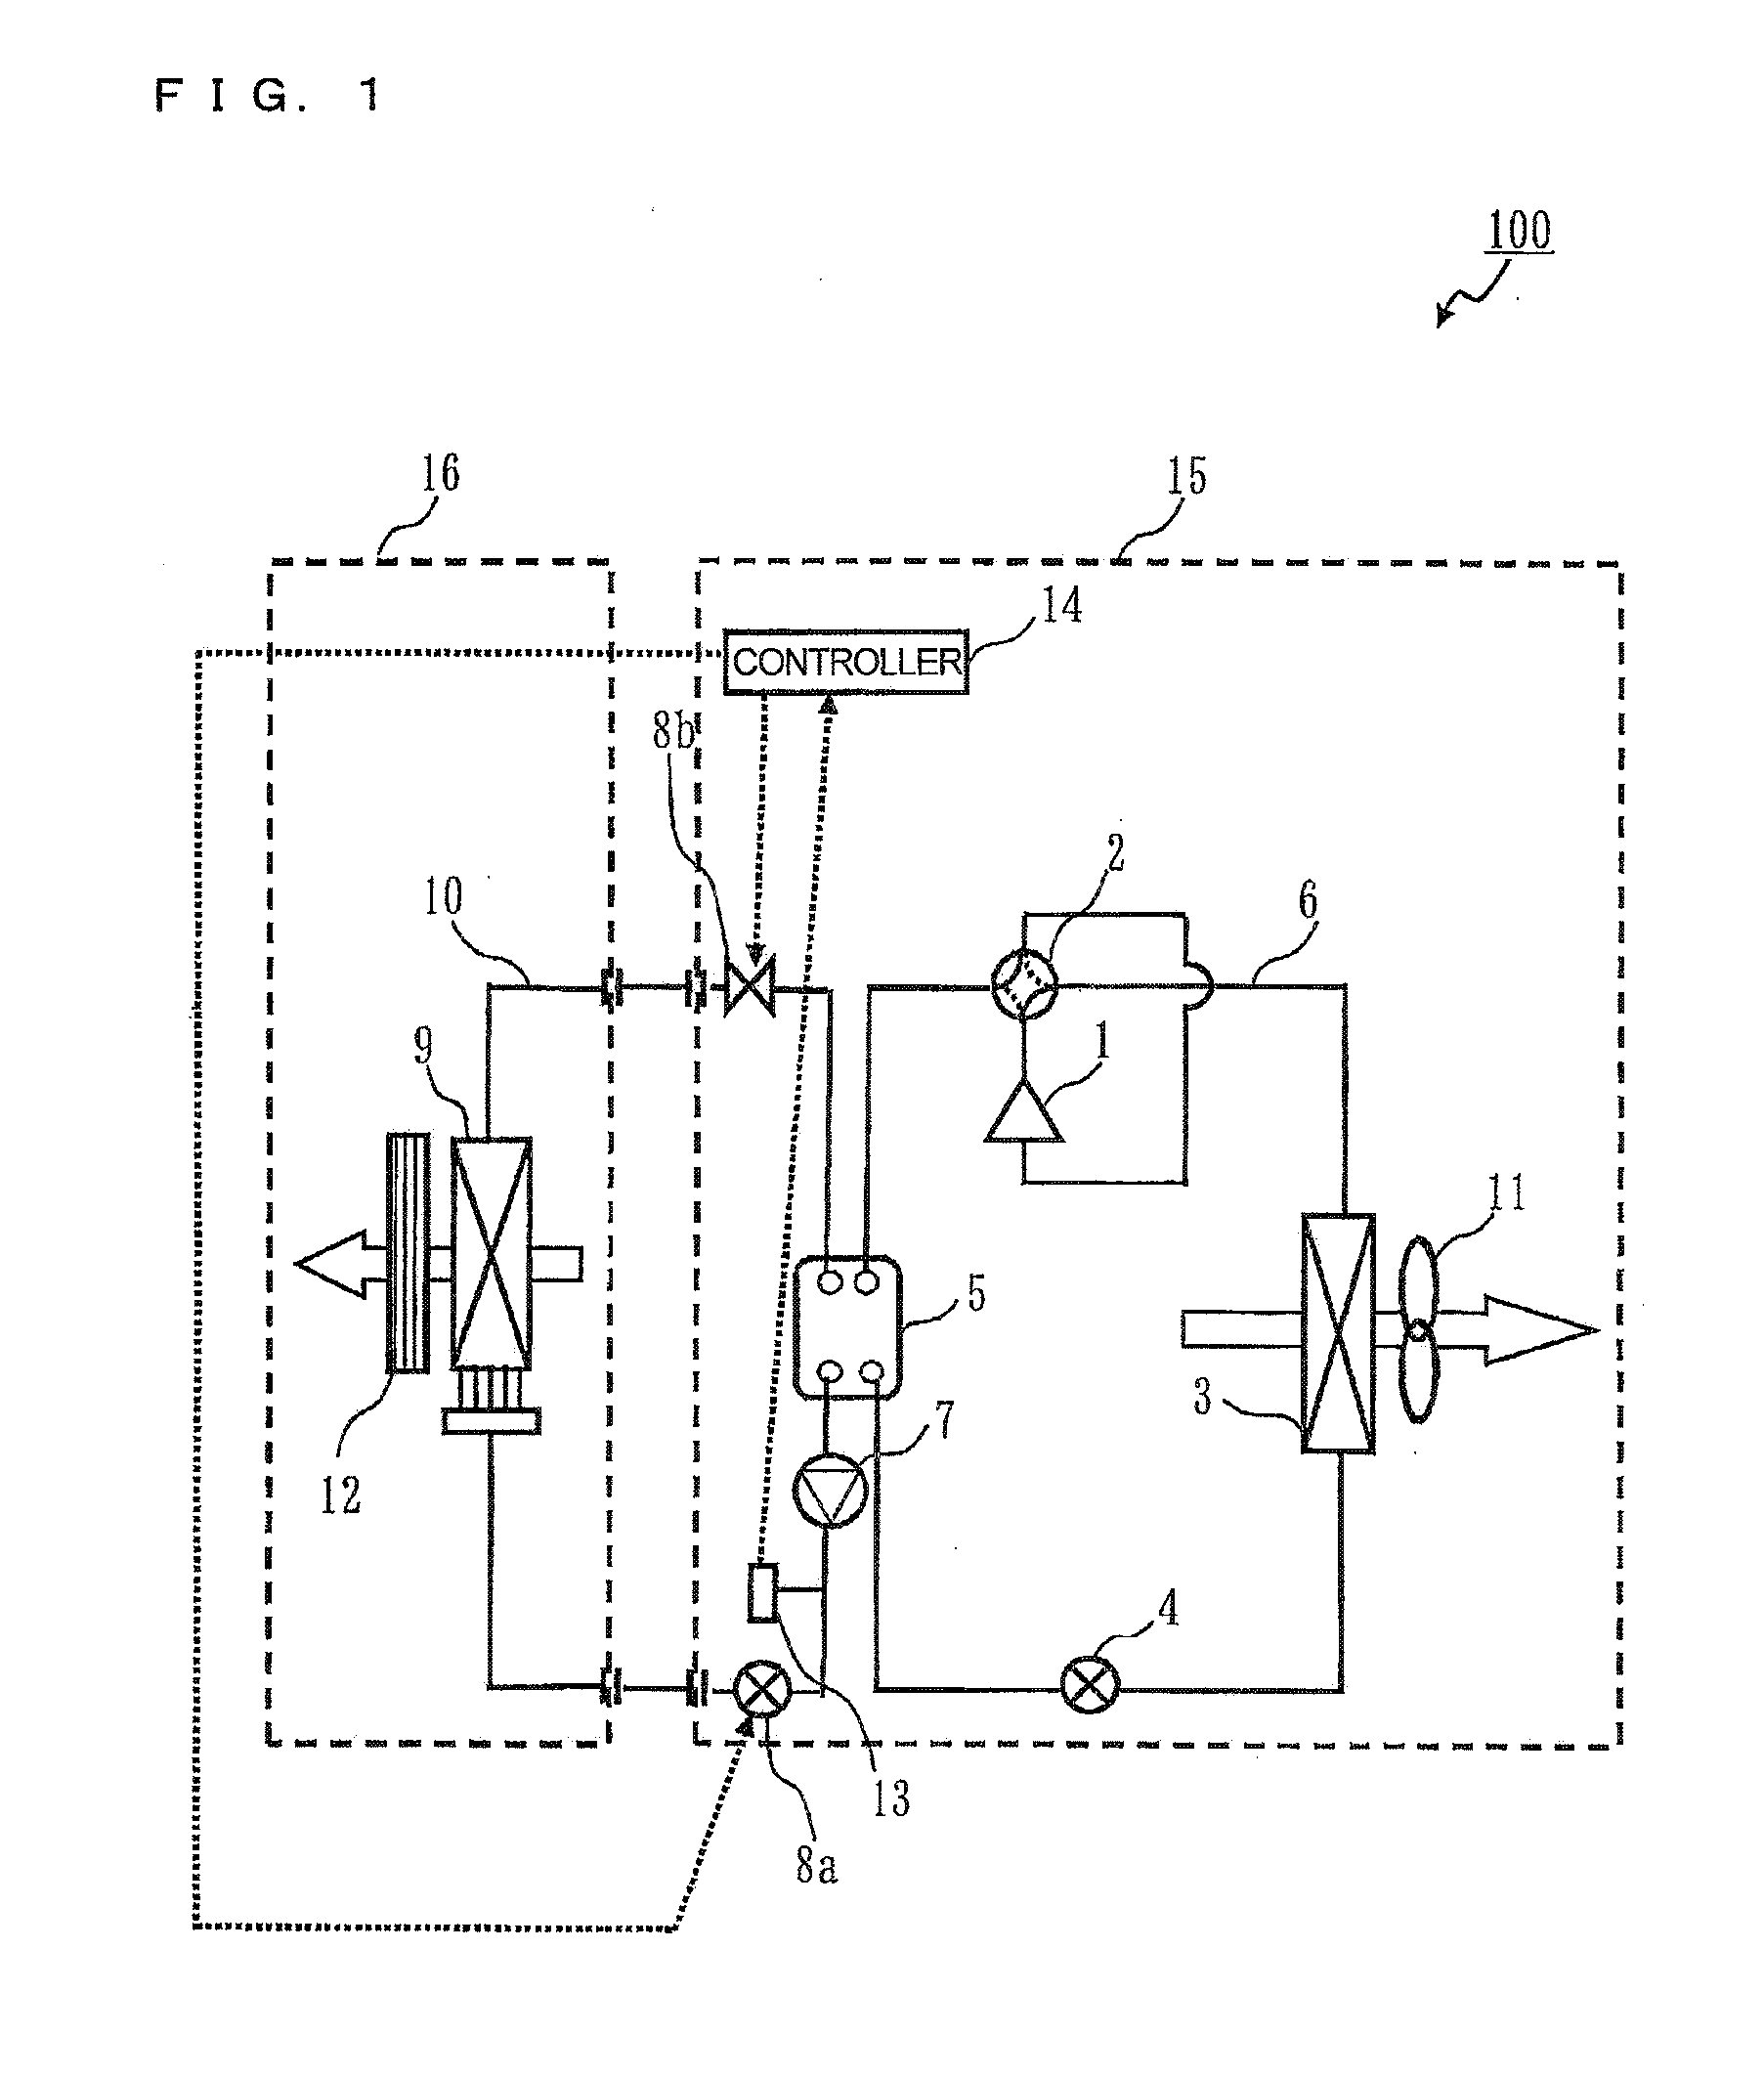 Heat pump apparatus and method of controlling heat pump apparatus